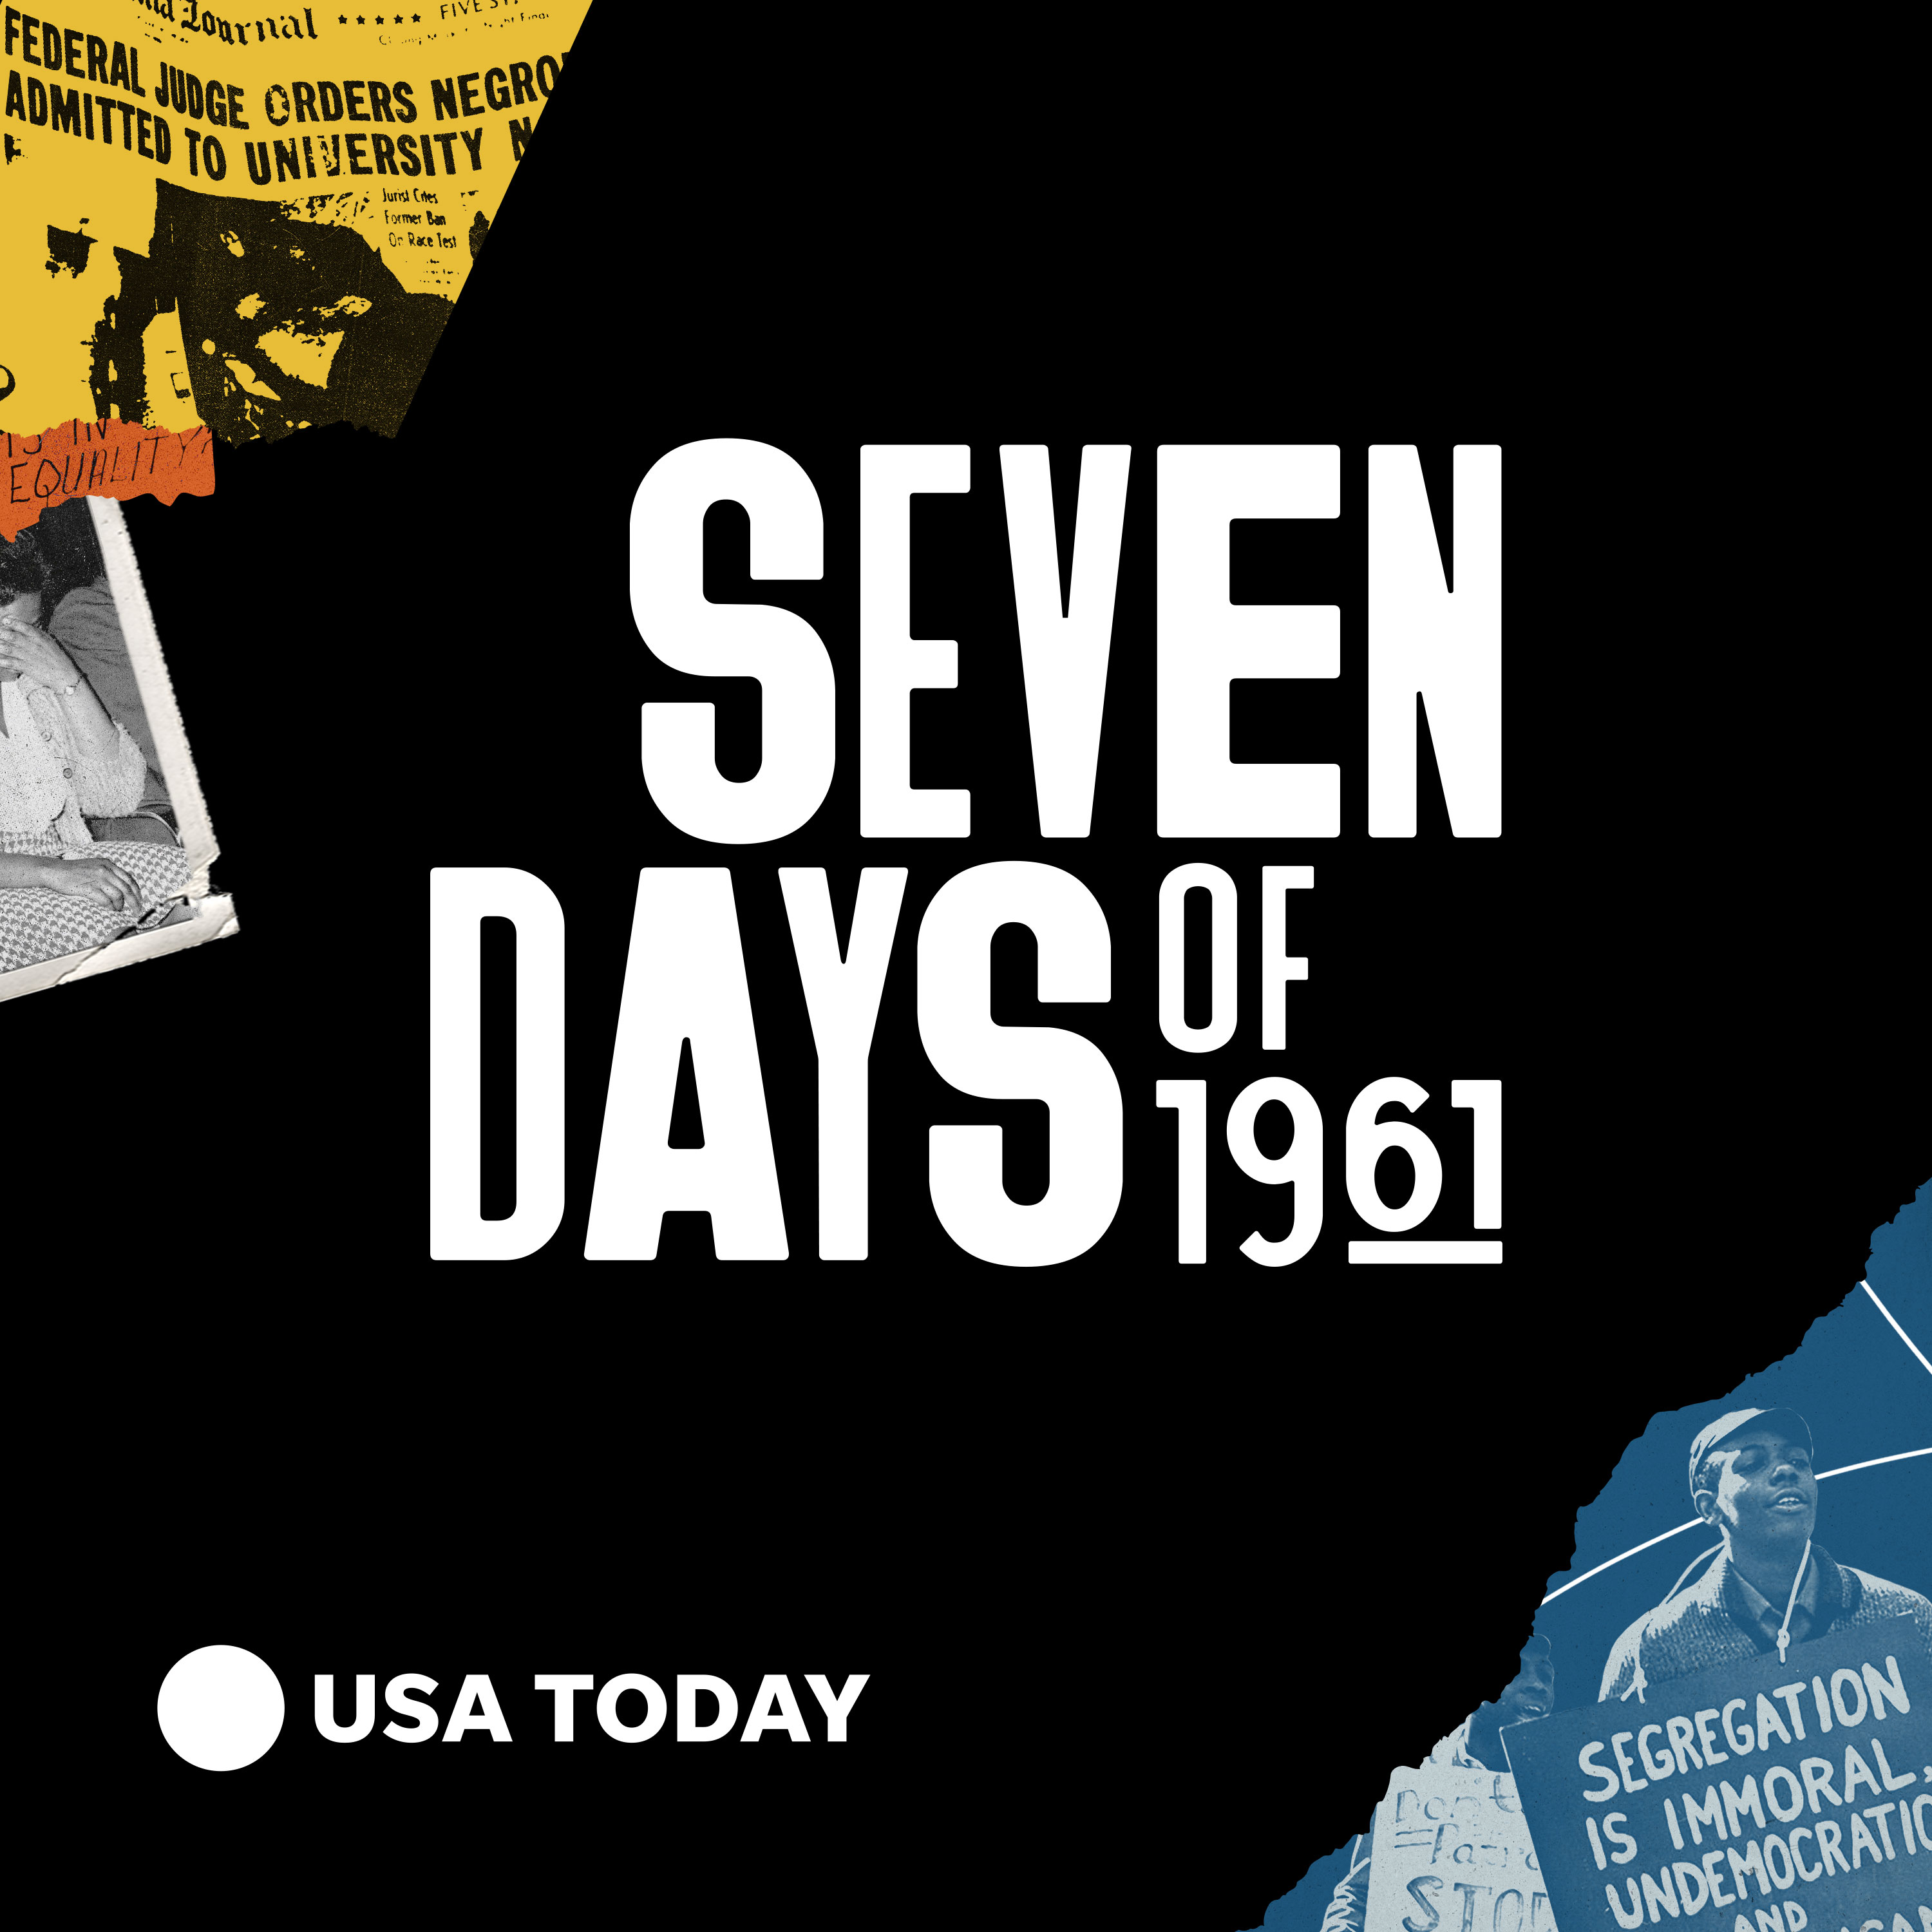 Trailer: Seven Days of 1961